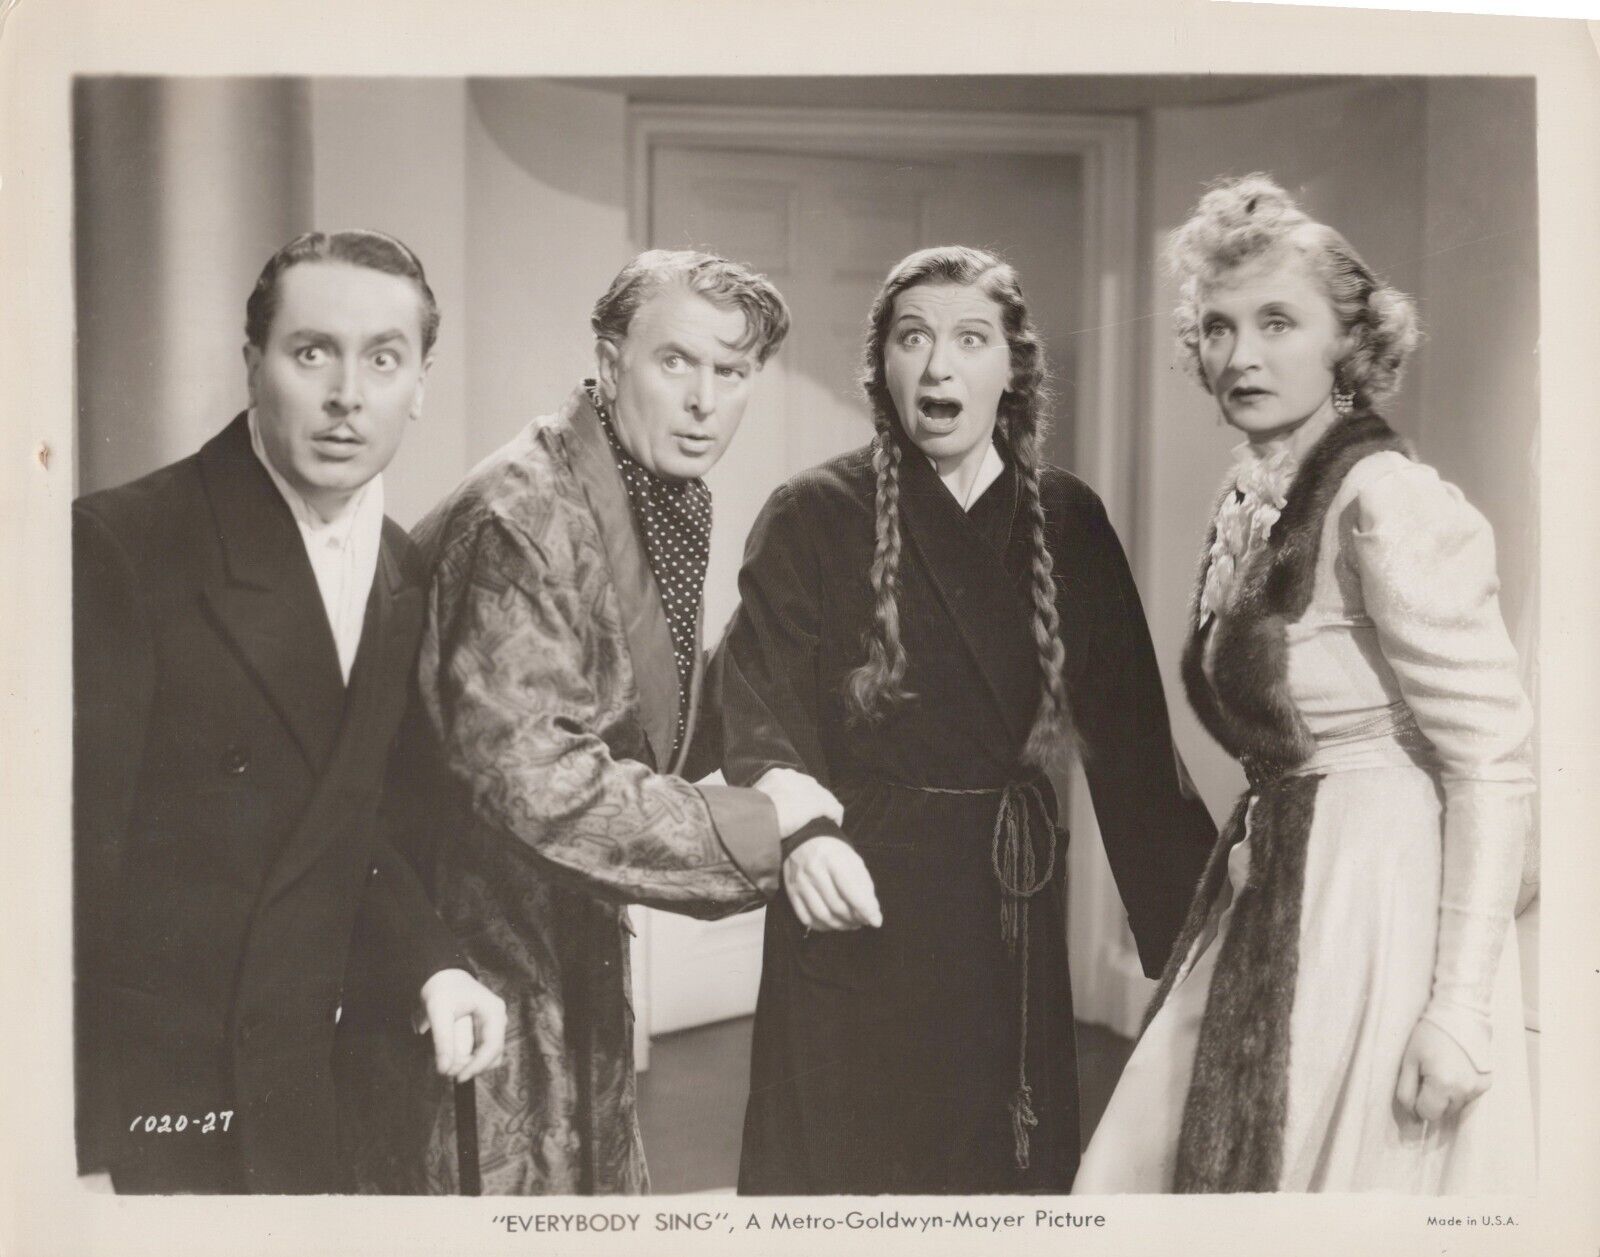 Reginald Gardiner + Reginald Owen + Fanny Brice + Helen Troy (1938) Photo K 387